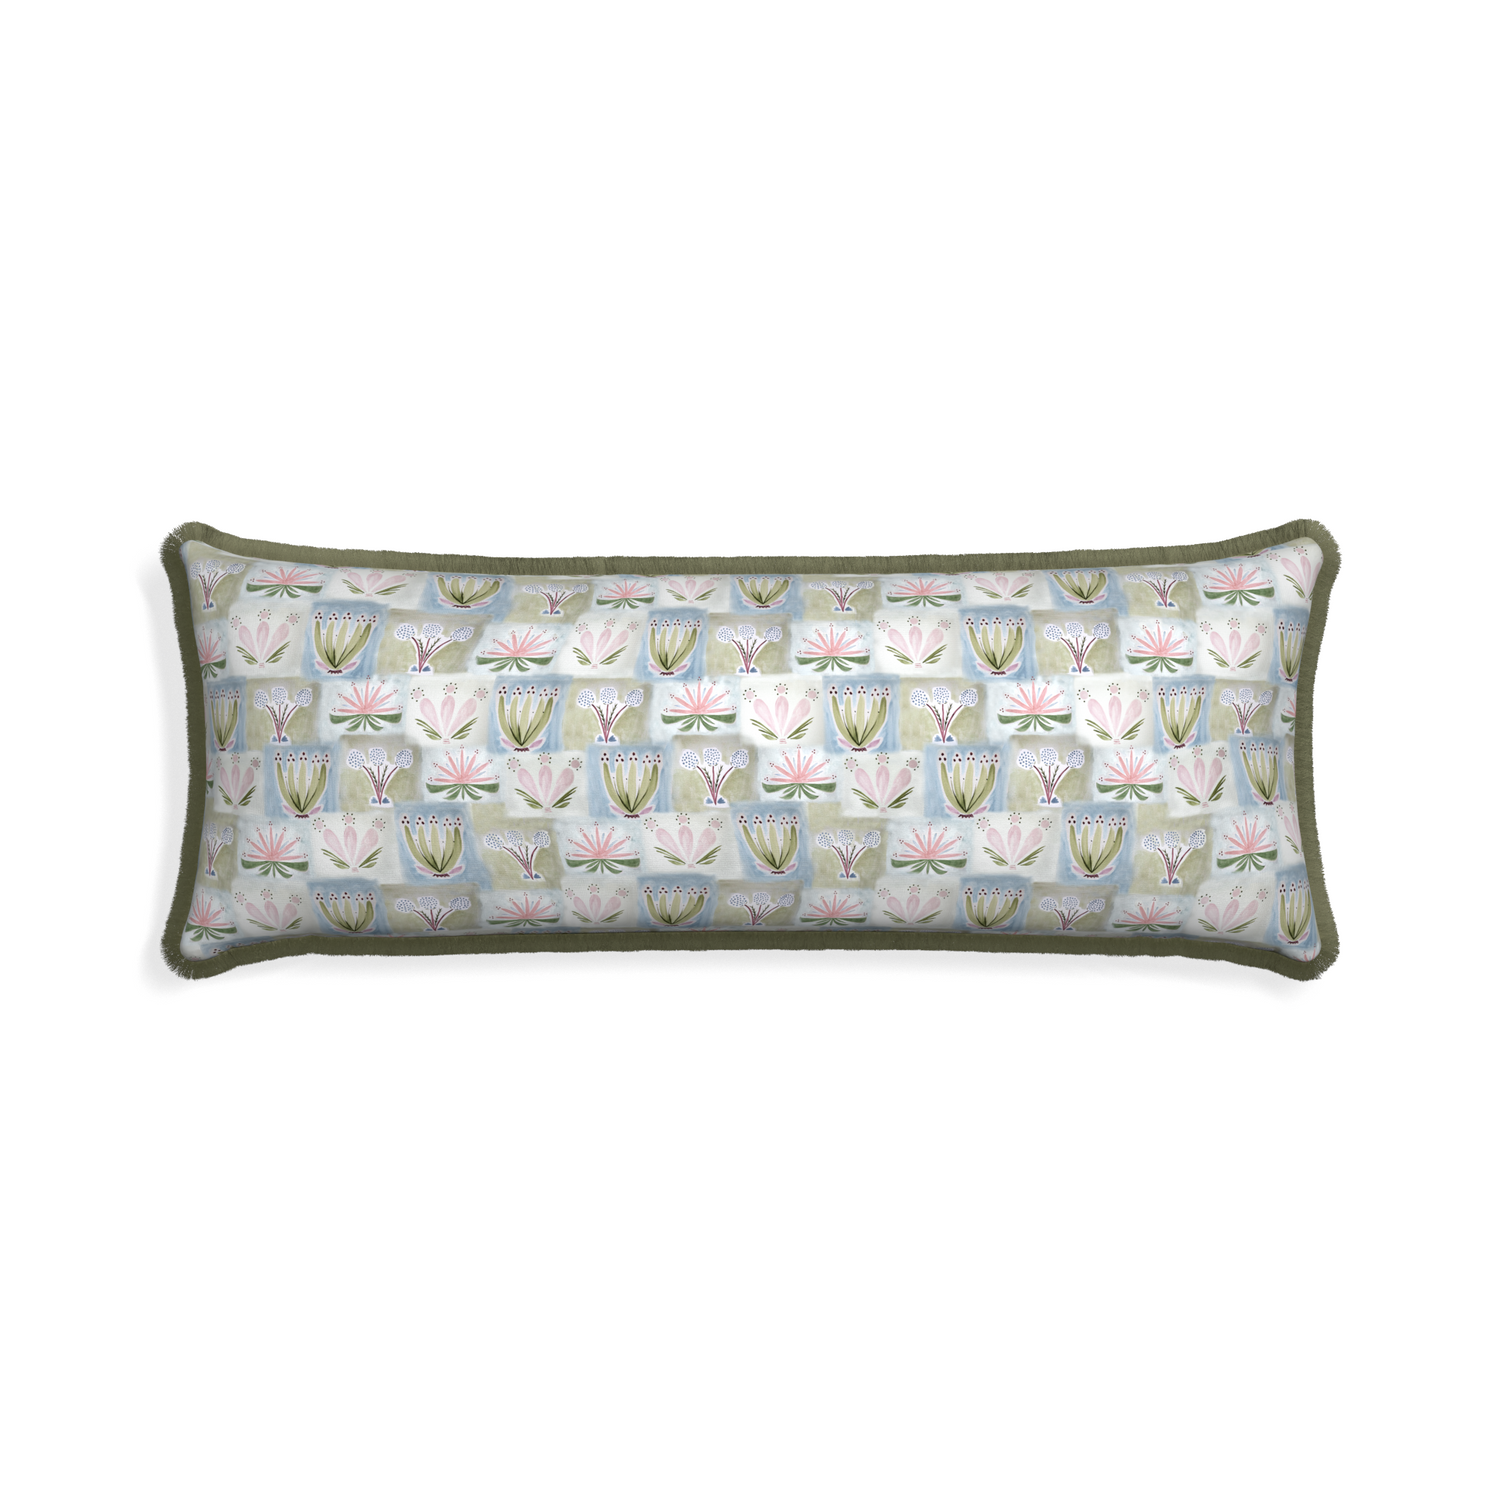 Xl-lumbar harper custom pillow with sage fringe on white background